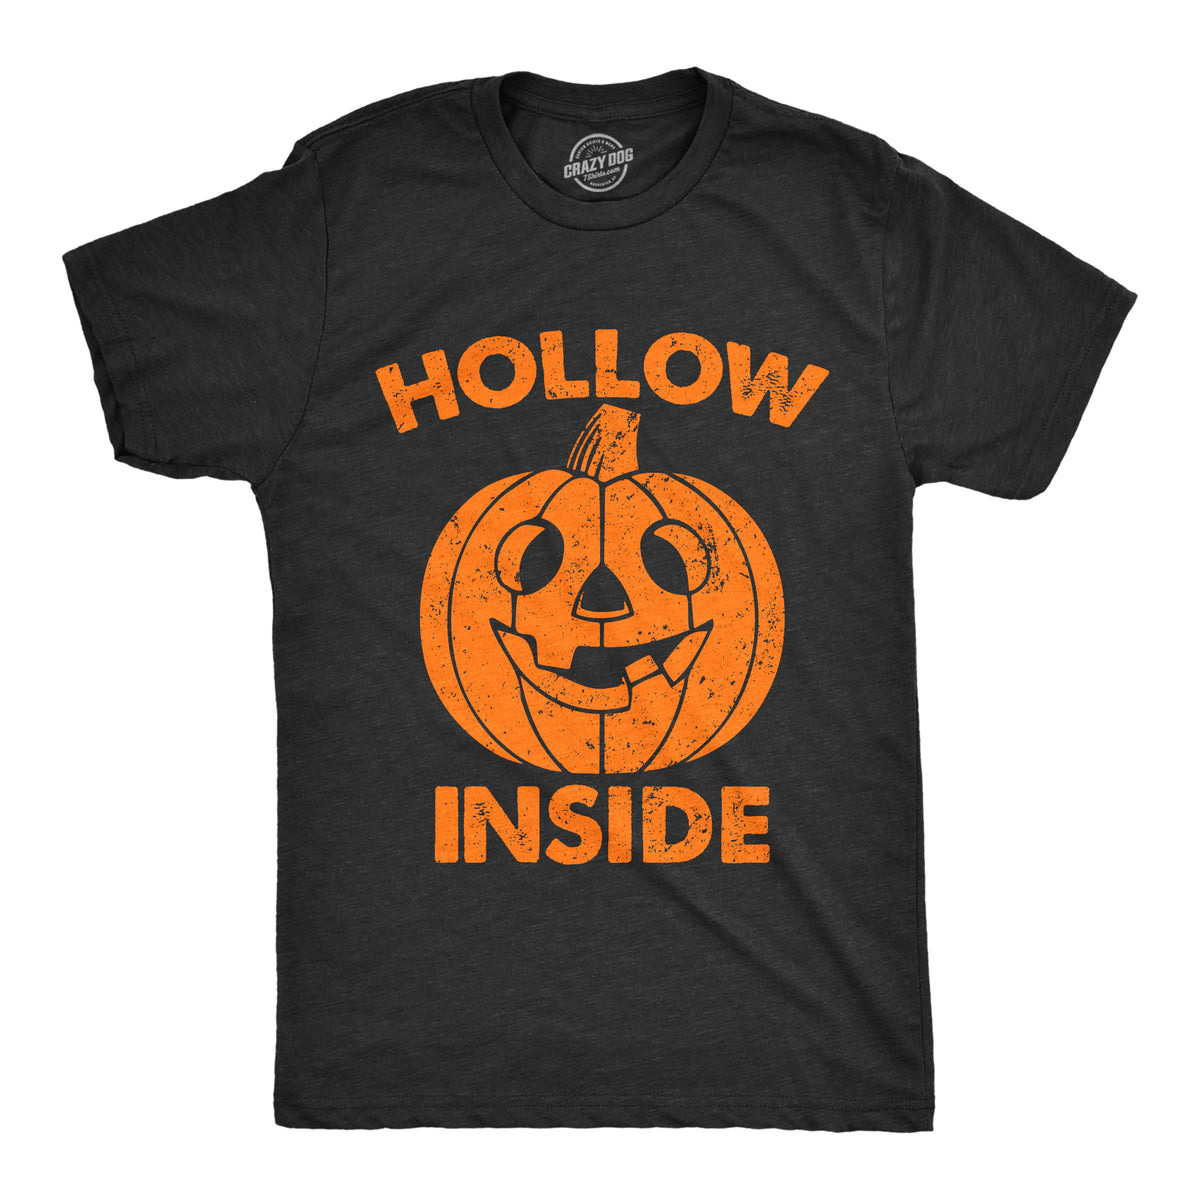 Funny Heather Black - HOLLOW Hollow Inside Mens T Shirt Nerdy Halloween sarcastic Tee